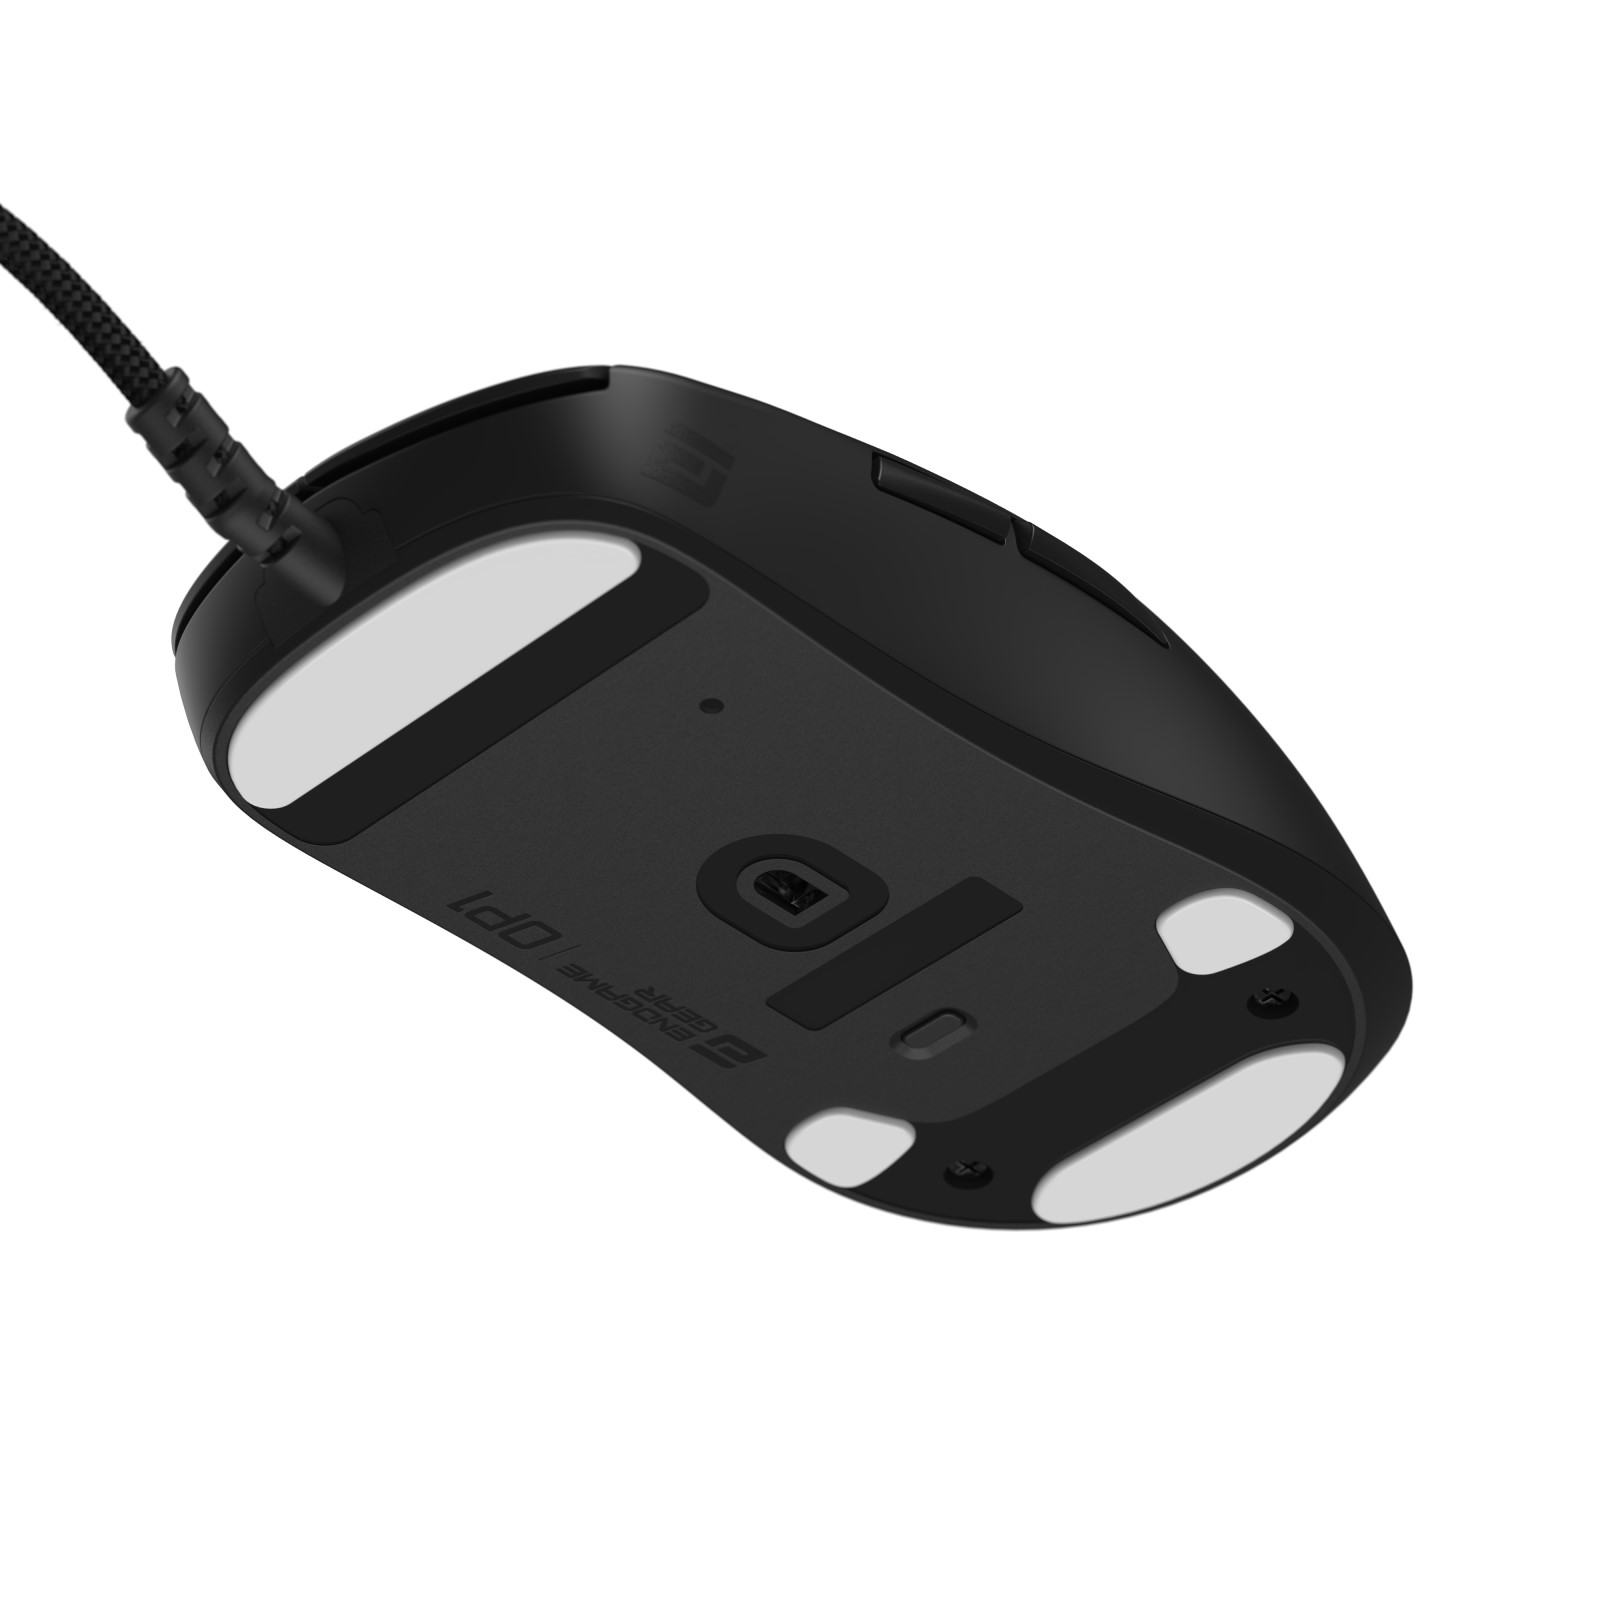 Endgame Gear OP1 8K Gaming Mouse Black